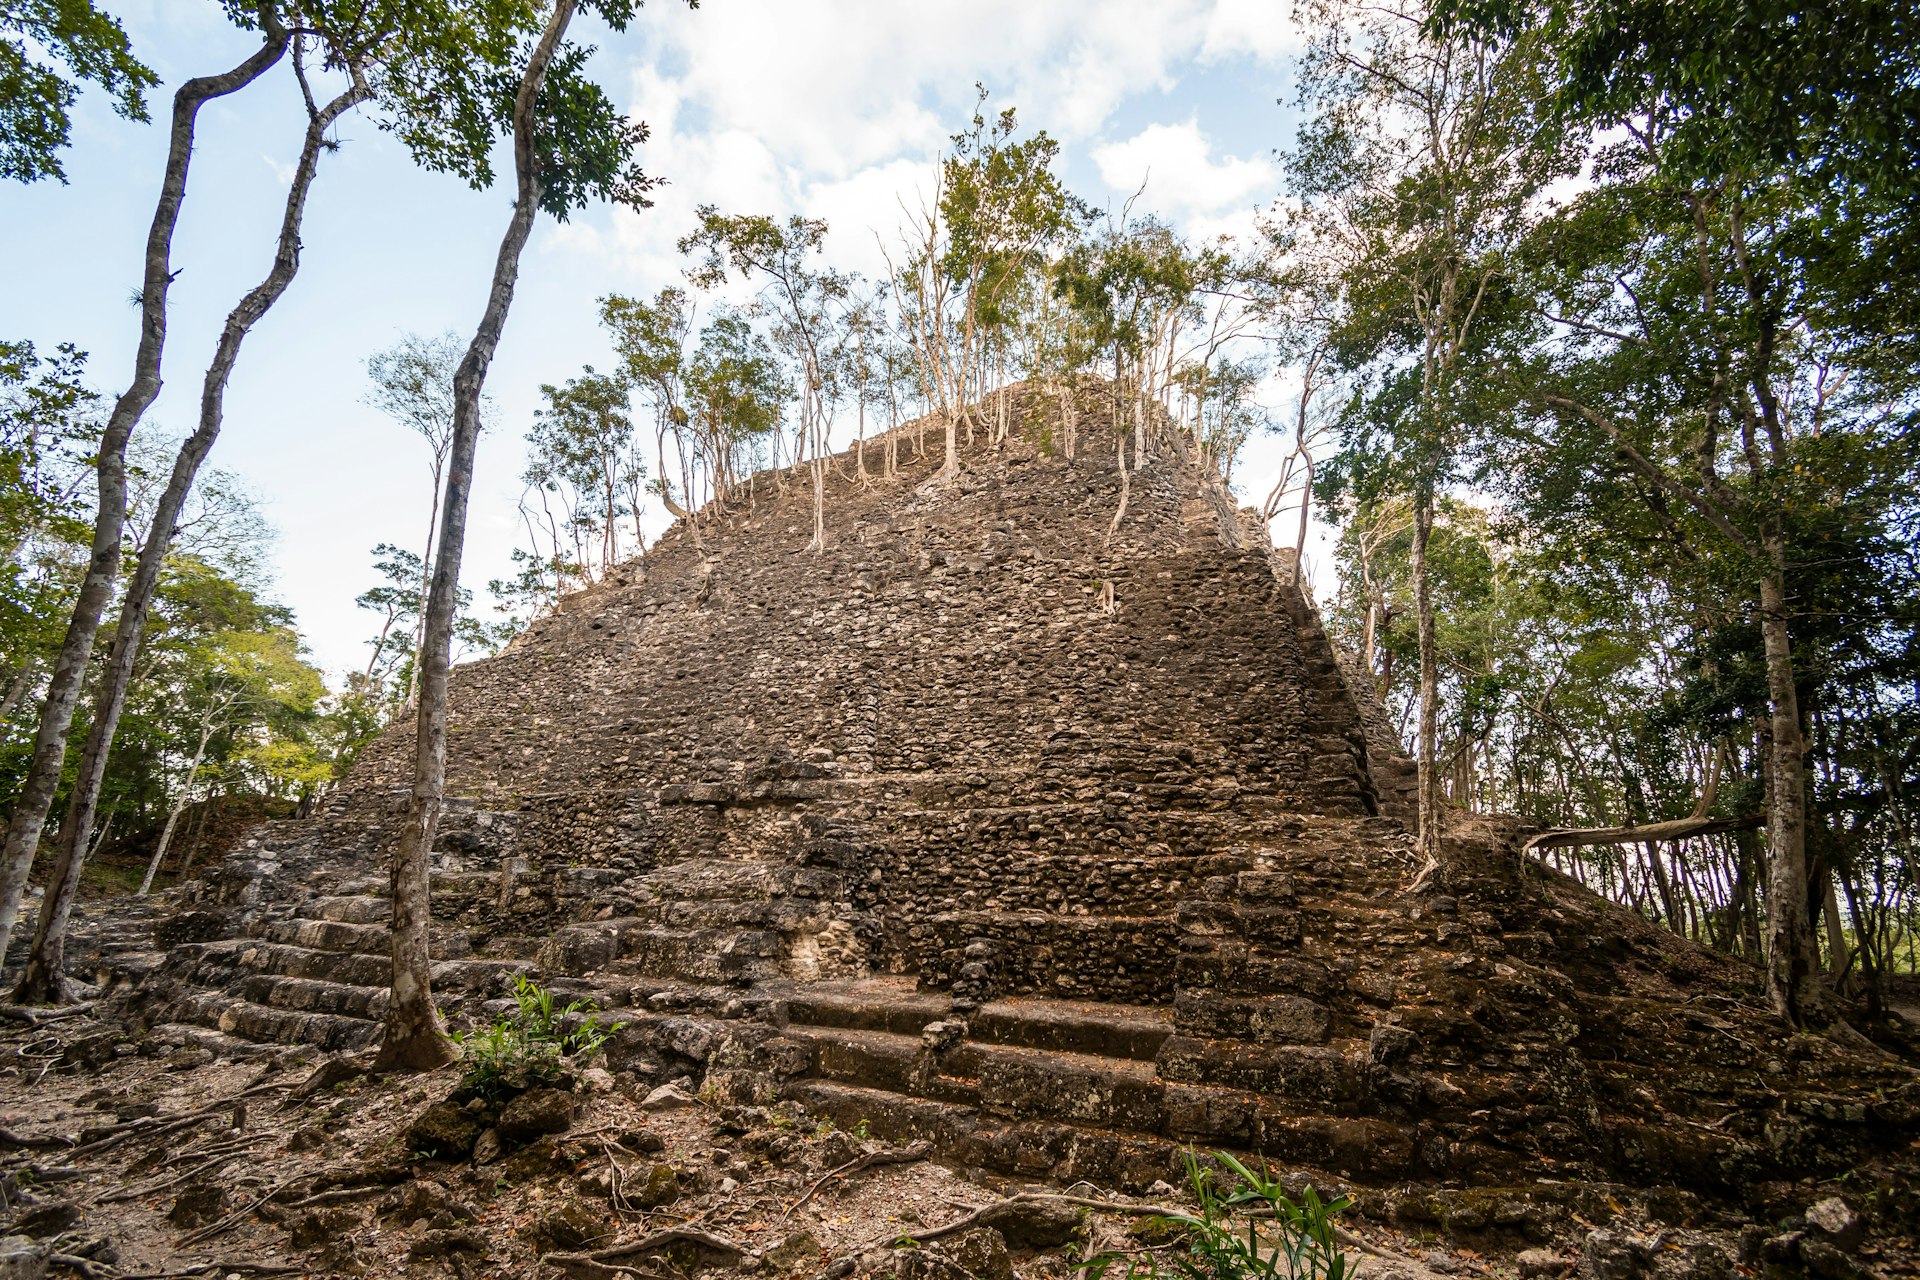 The pyramid of La Danta at El Mirador, deep in the Guatemalan jungle